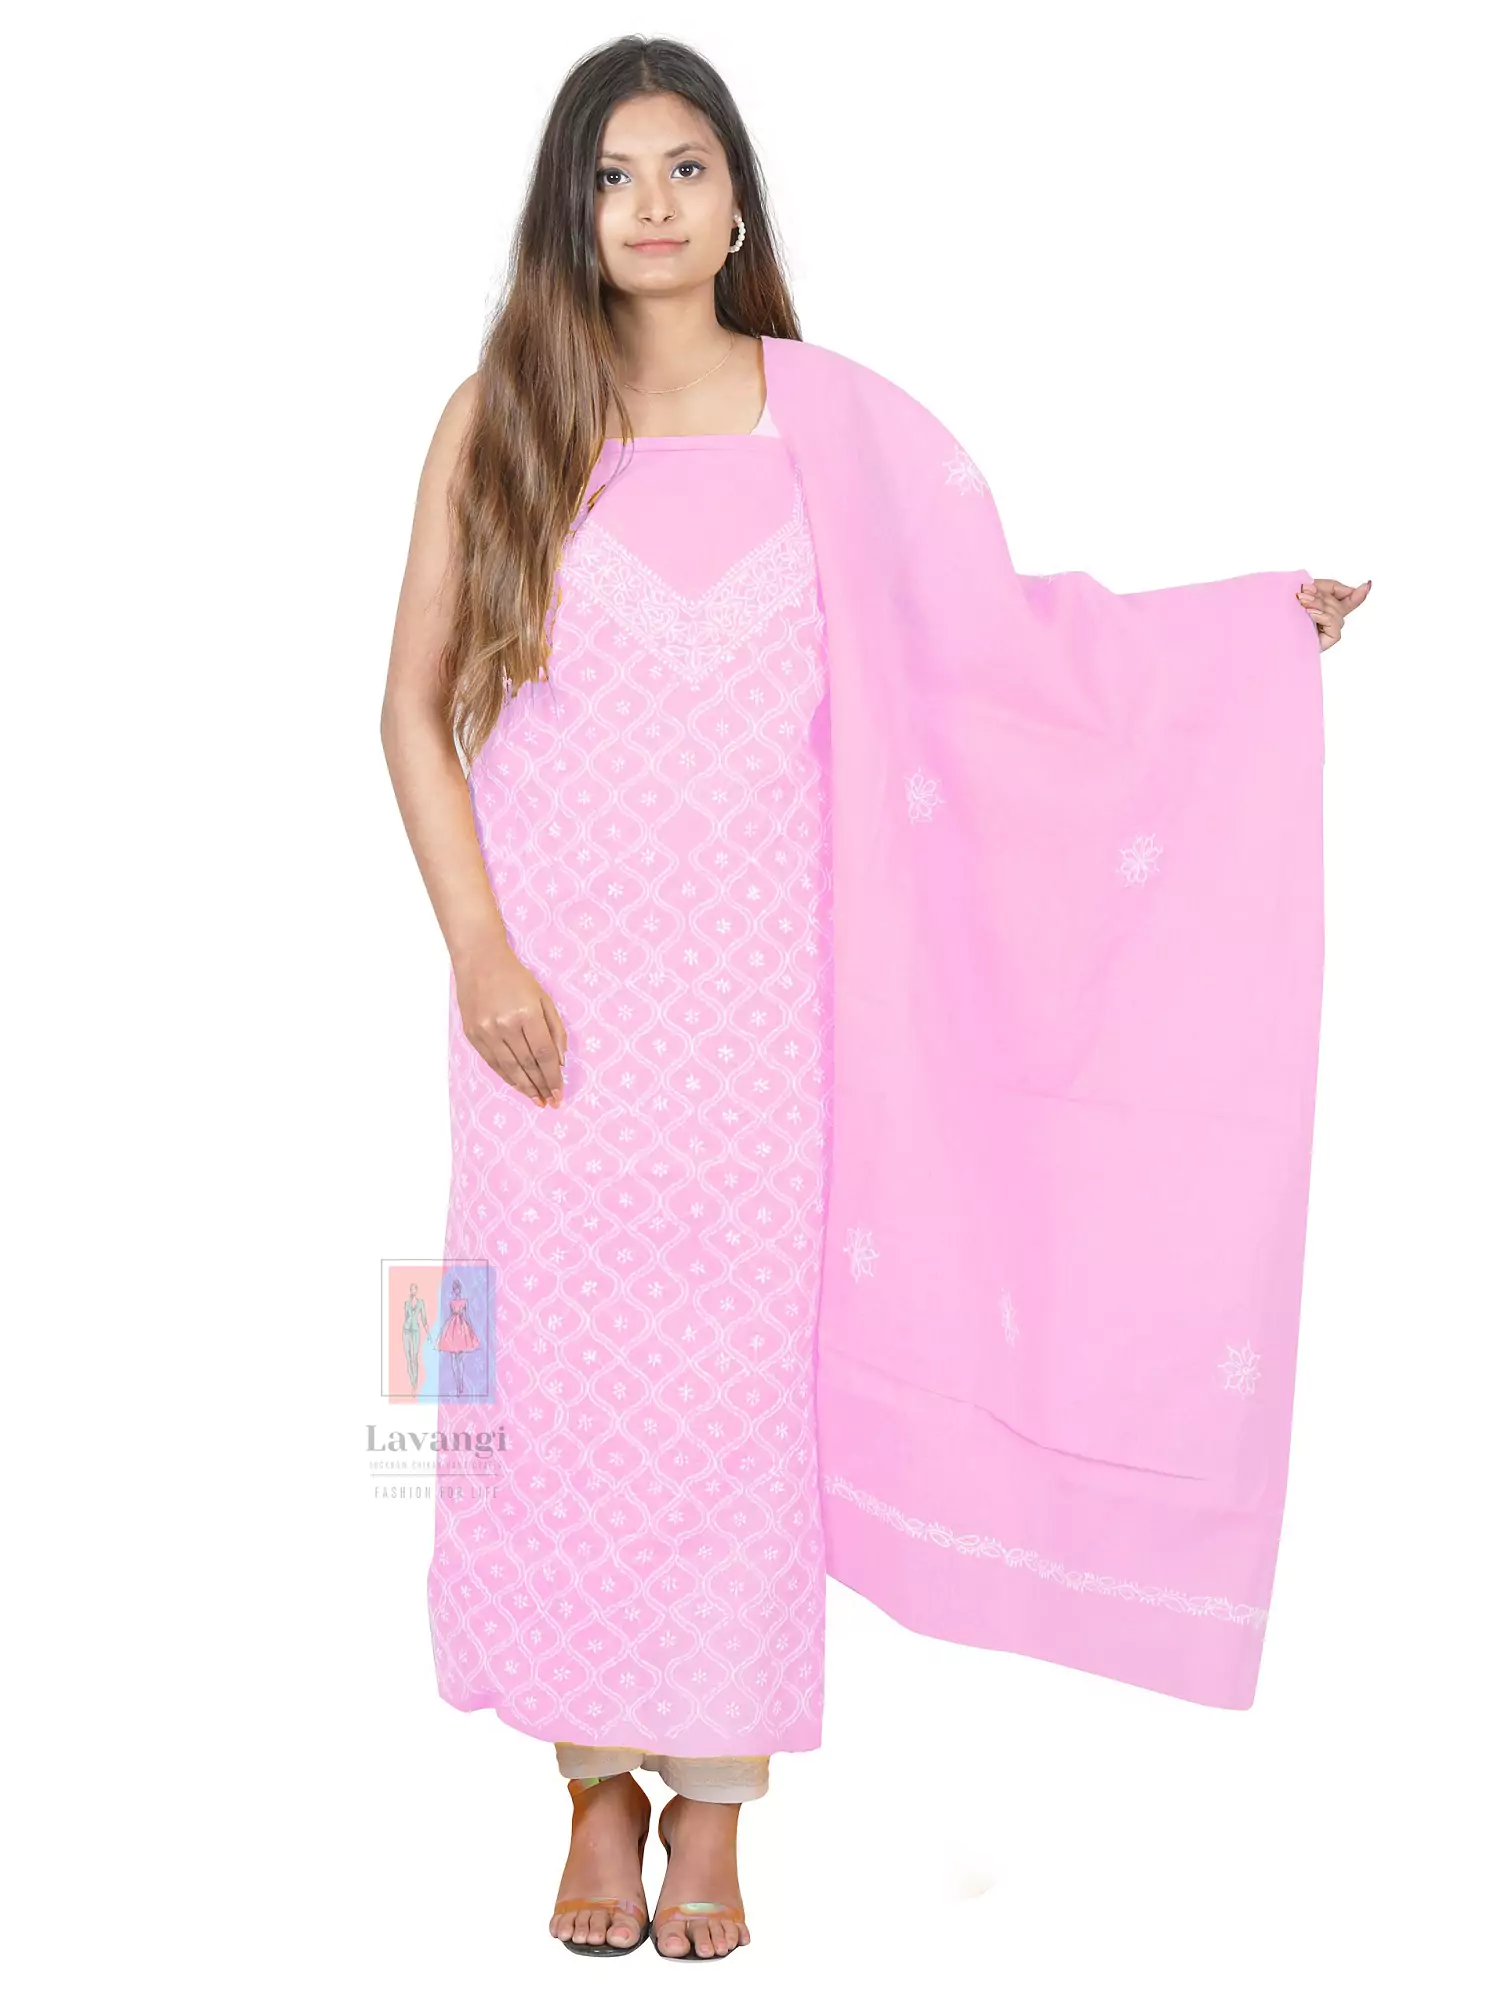 Lavangi Women Lucknow Chikankari Cotton Baby Pink Colour unstitched suit length